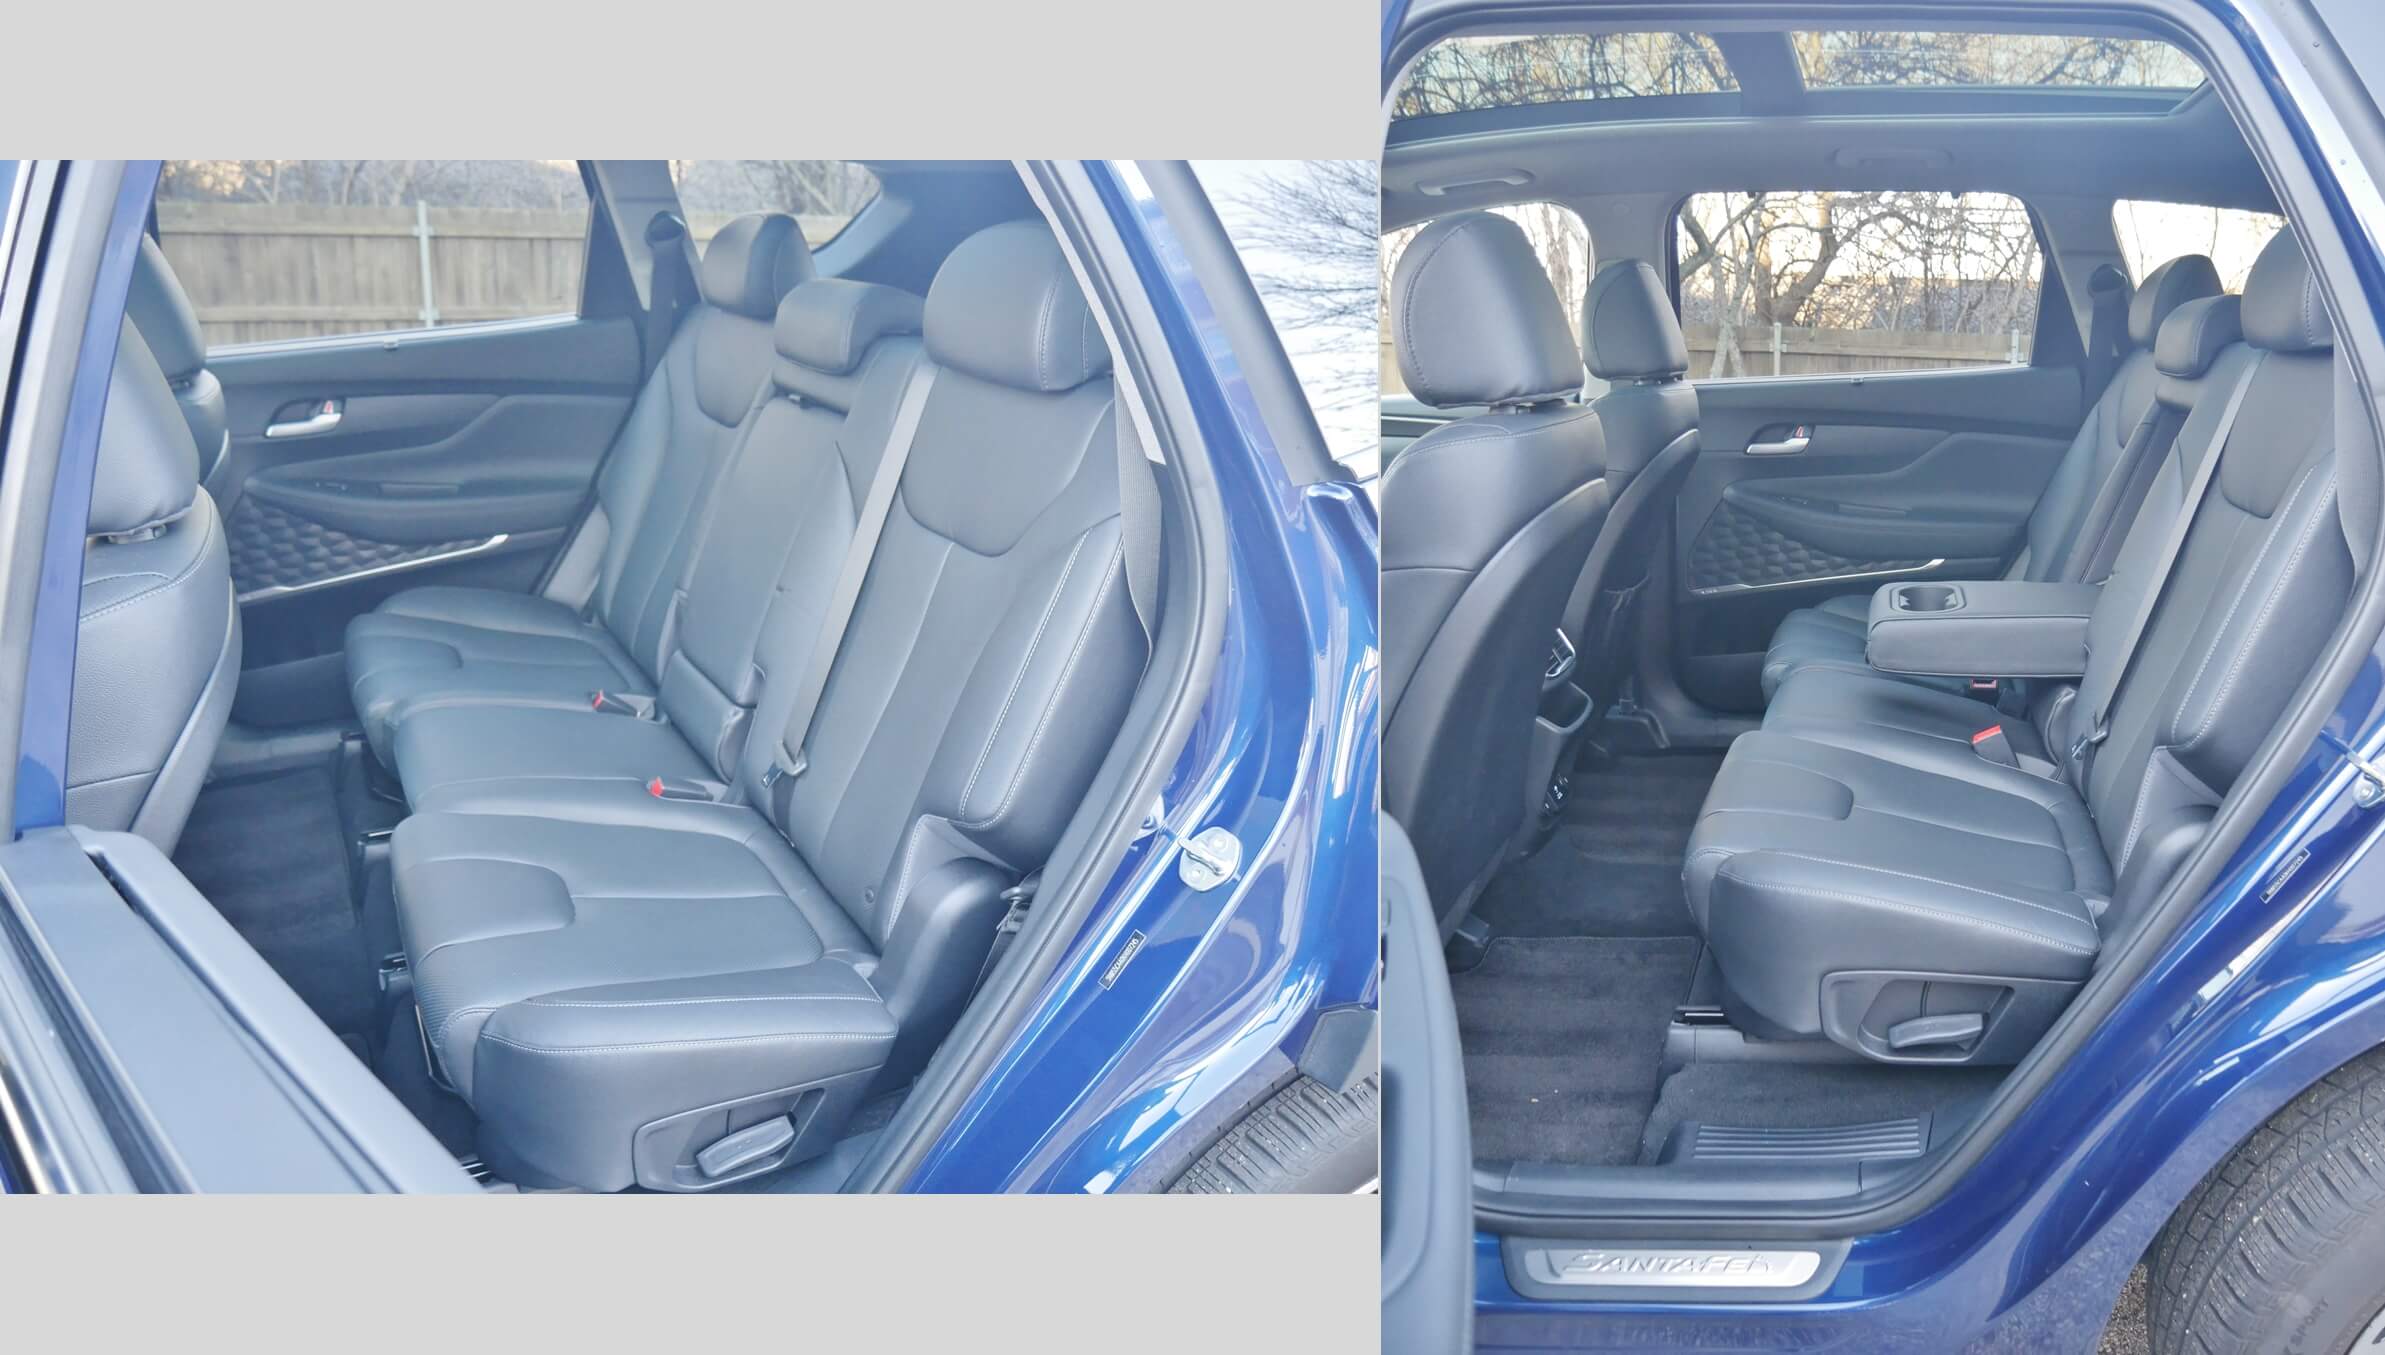 2019 Hyundai Santa Fe 2.0T Ultimate AWD: Row 2 seating, glass generous for 3-adults